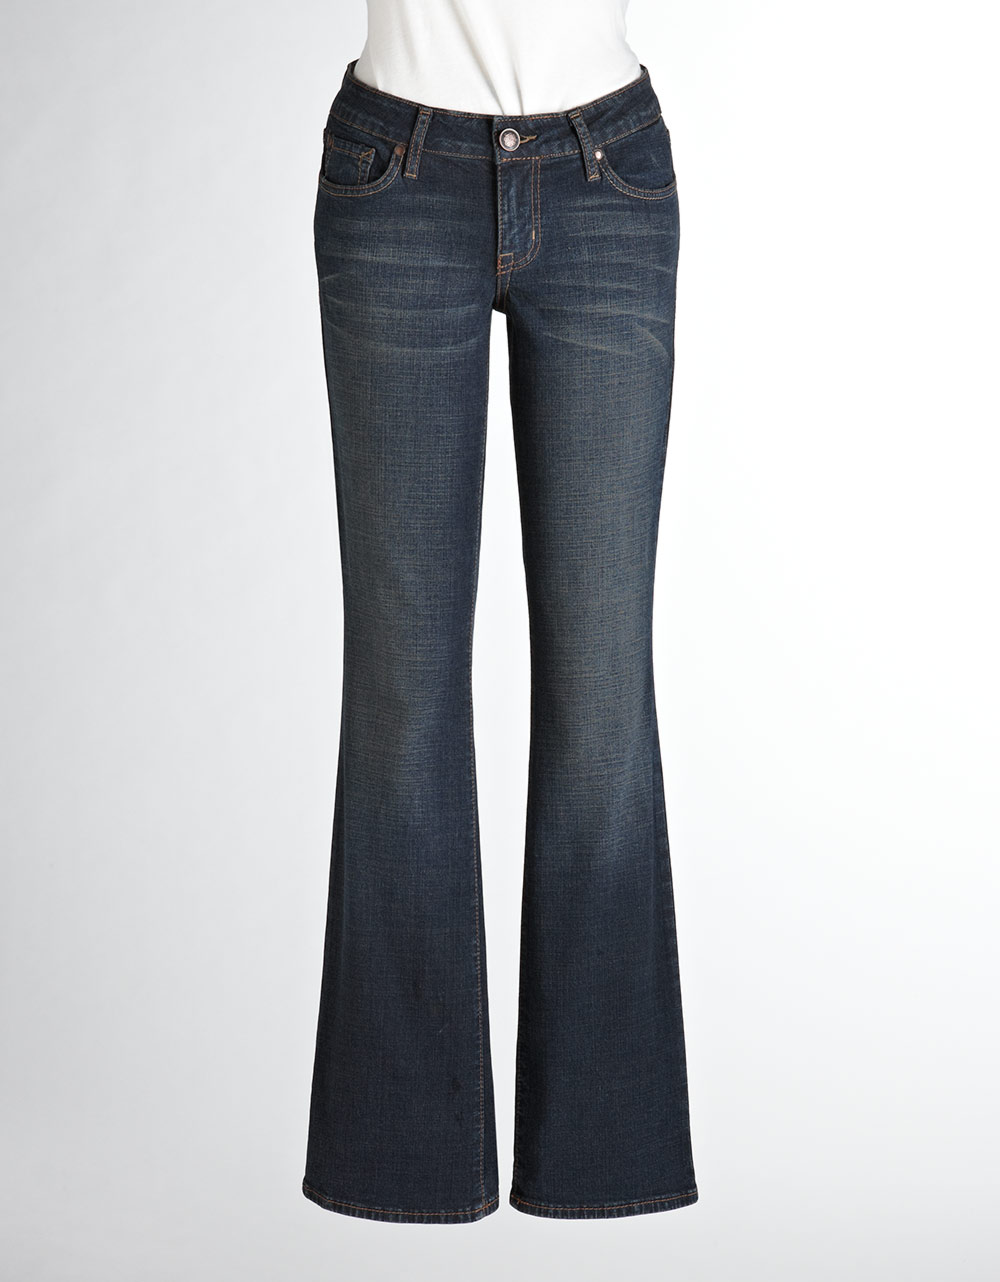 Lyst - Jessica Simpson Rockin Curvy Bootcut Jeans in Blue